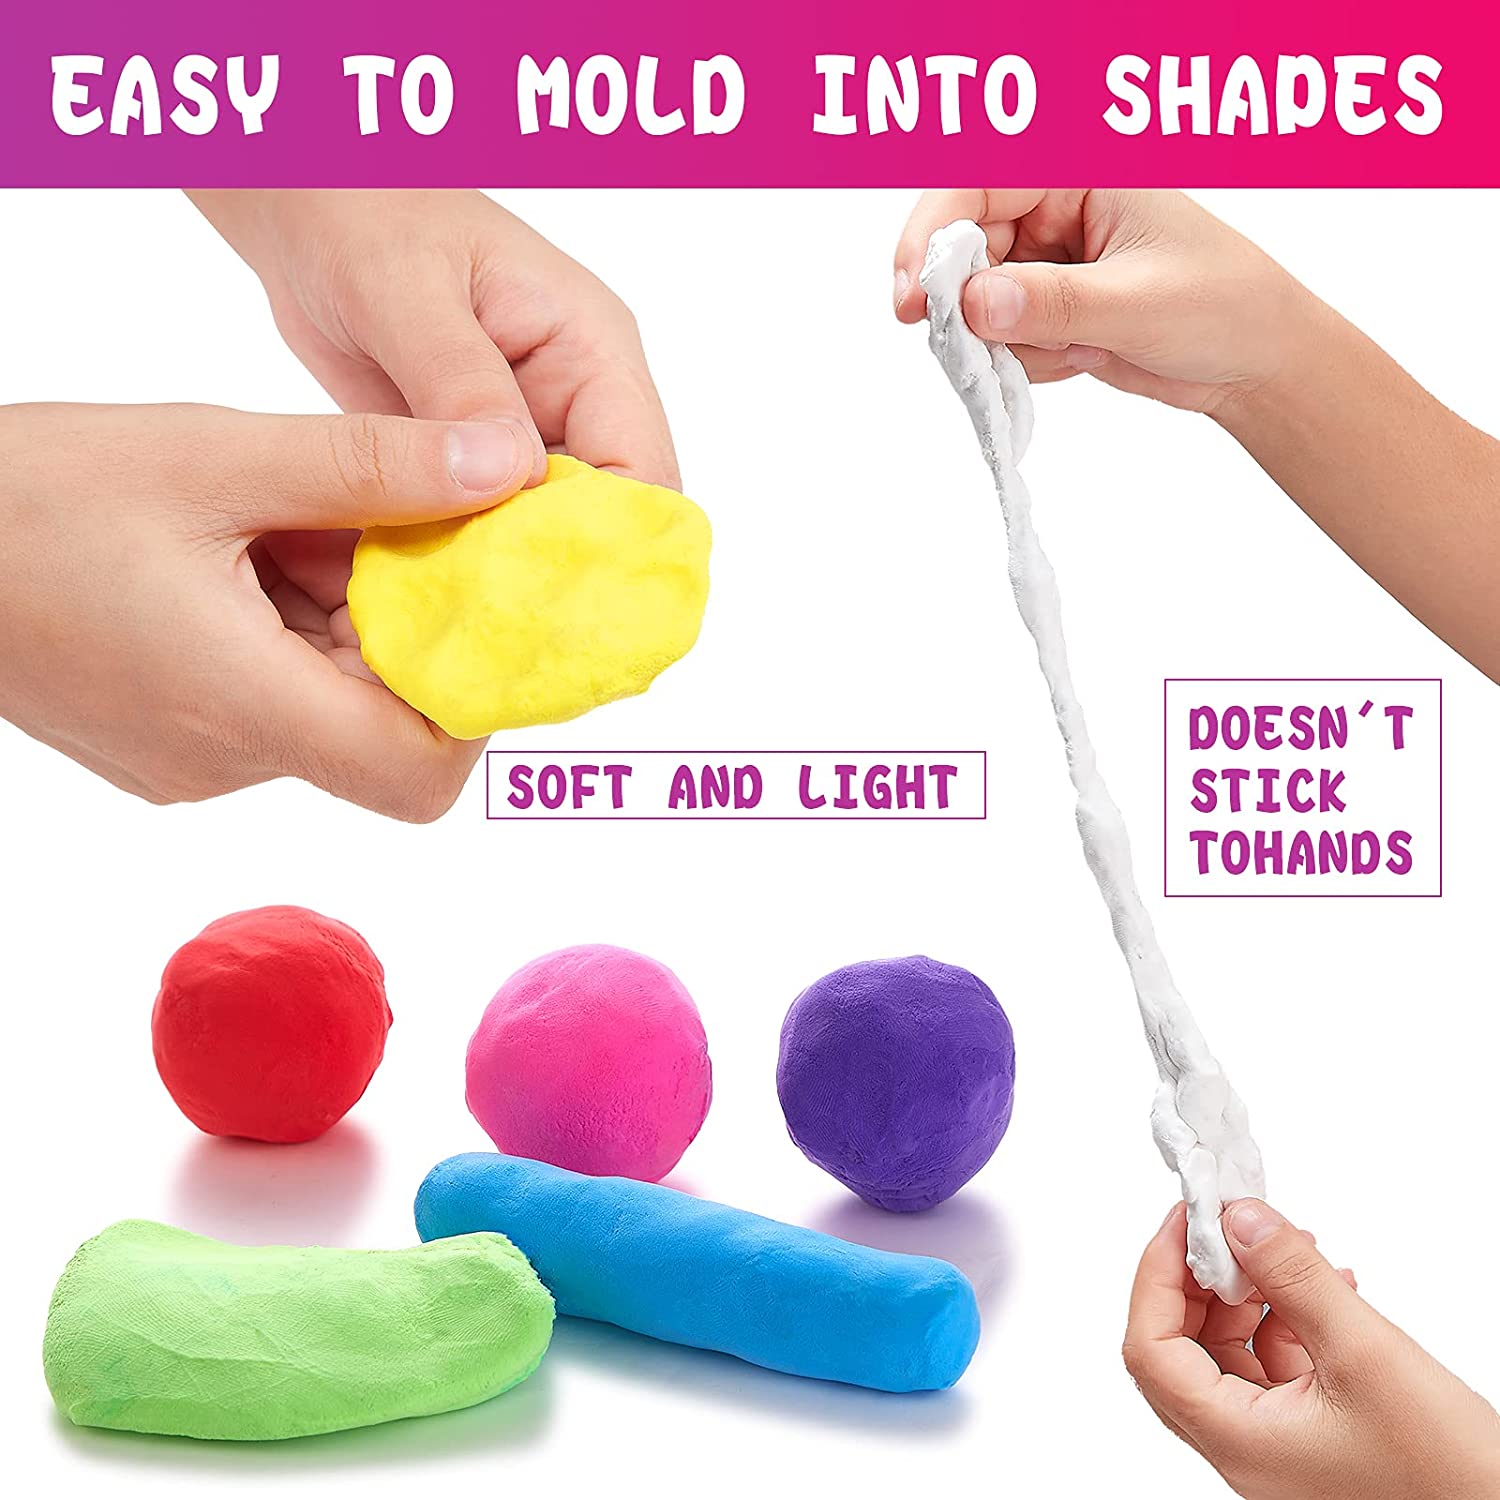 36 Colors Air Dry Magic Clay Soft & Ultra Light DIY Molding 